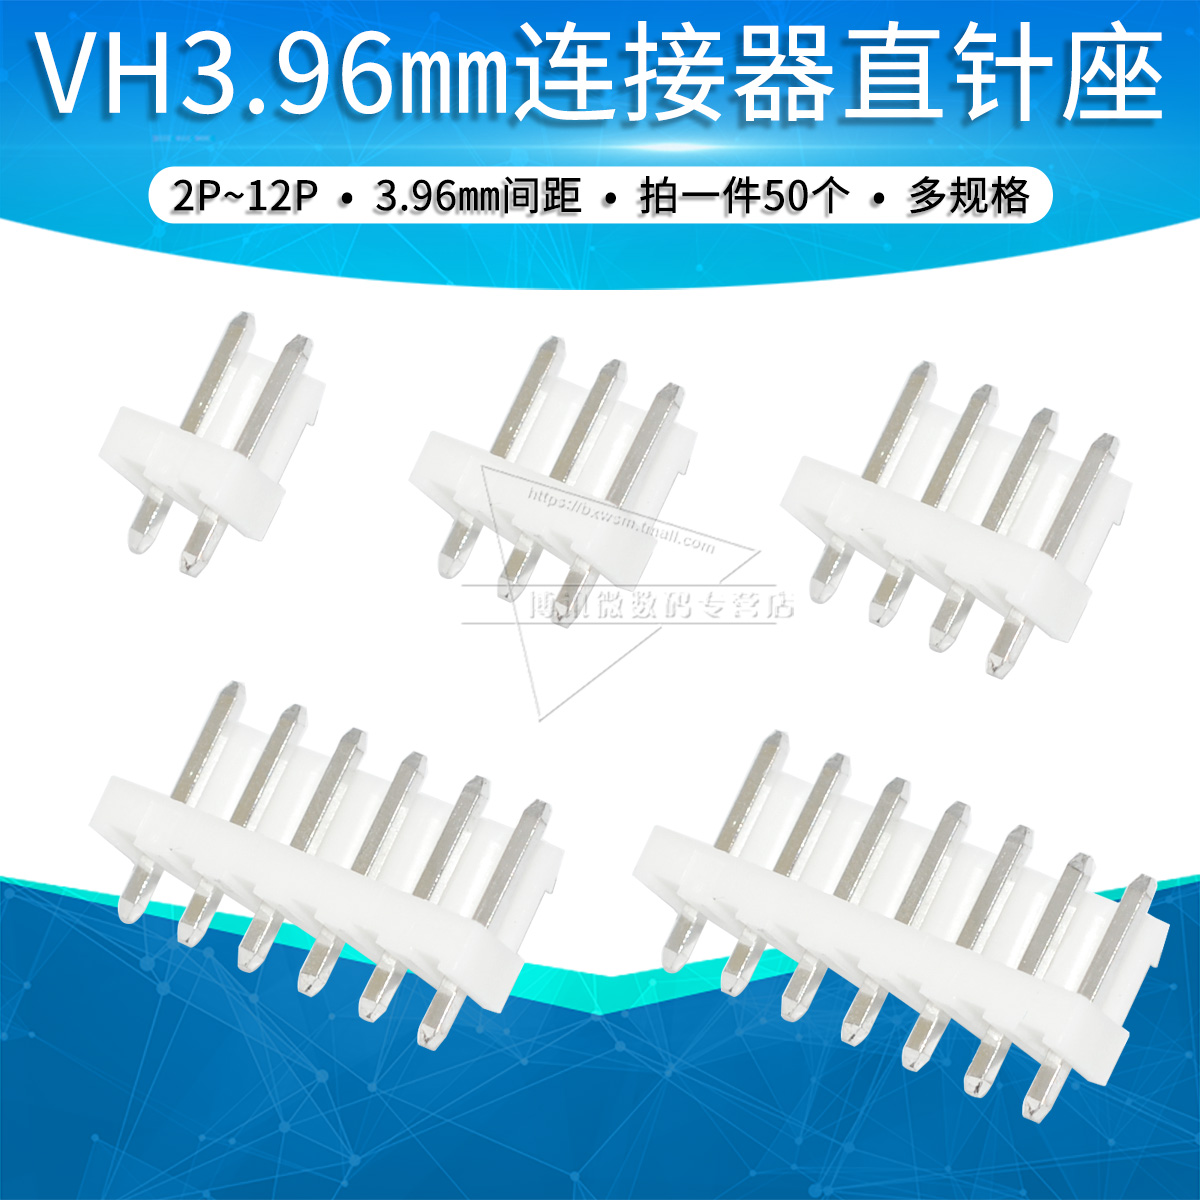 VH3.96 mm直针座 2p 3 4 5 6 8 10 pin直针180度插座连接器接插件